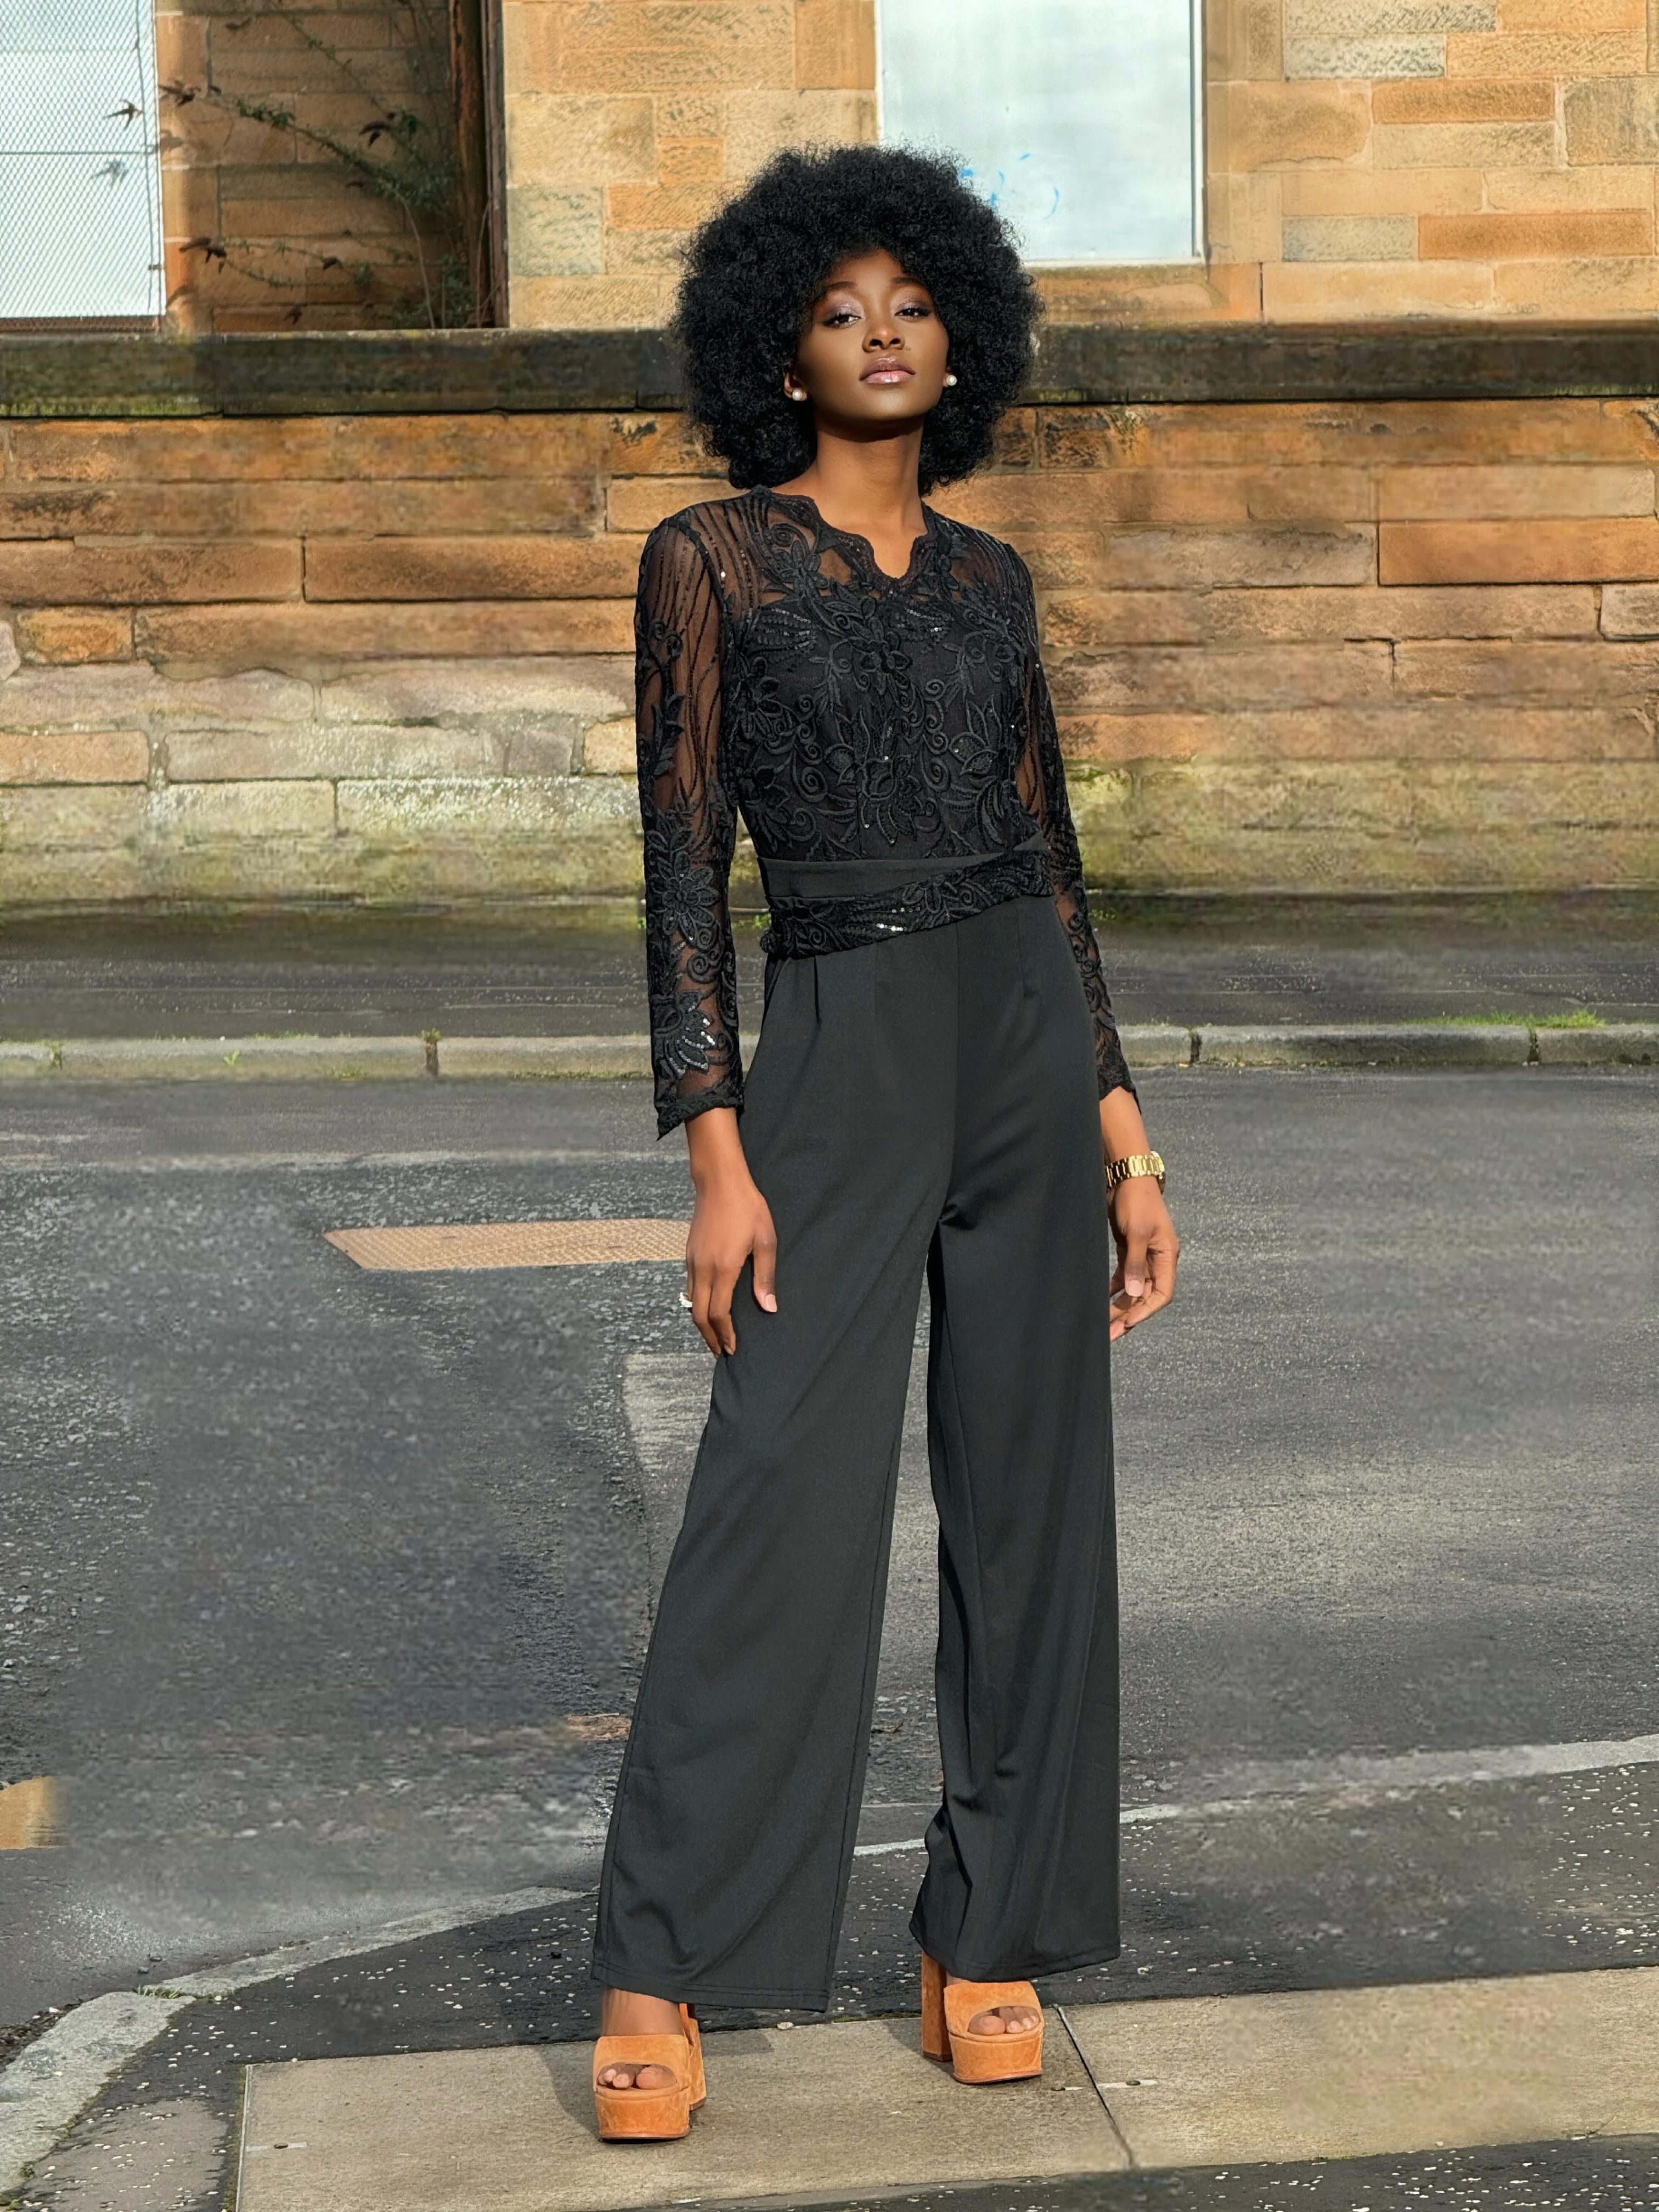 UK fashion blogger wearing a black jumpsuit